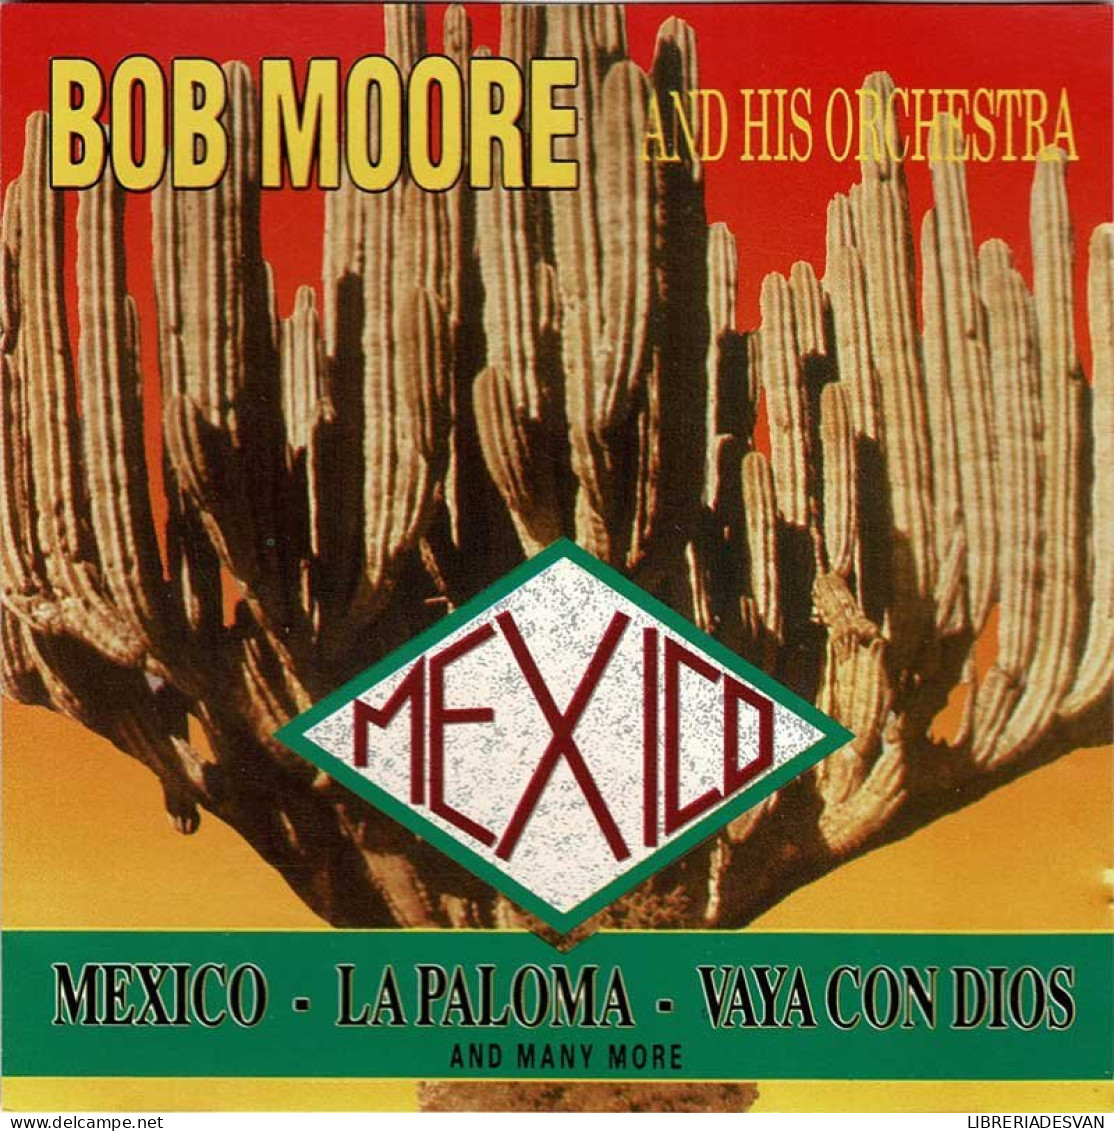 Bob Moore And His Orchestra - Mexico. CD - Country En Folk